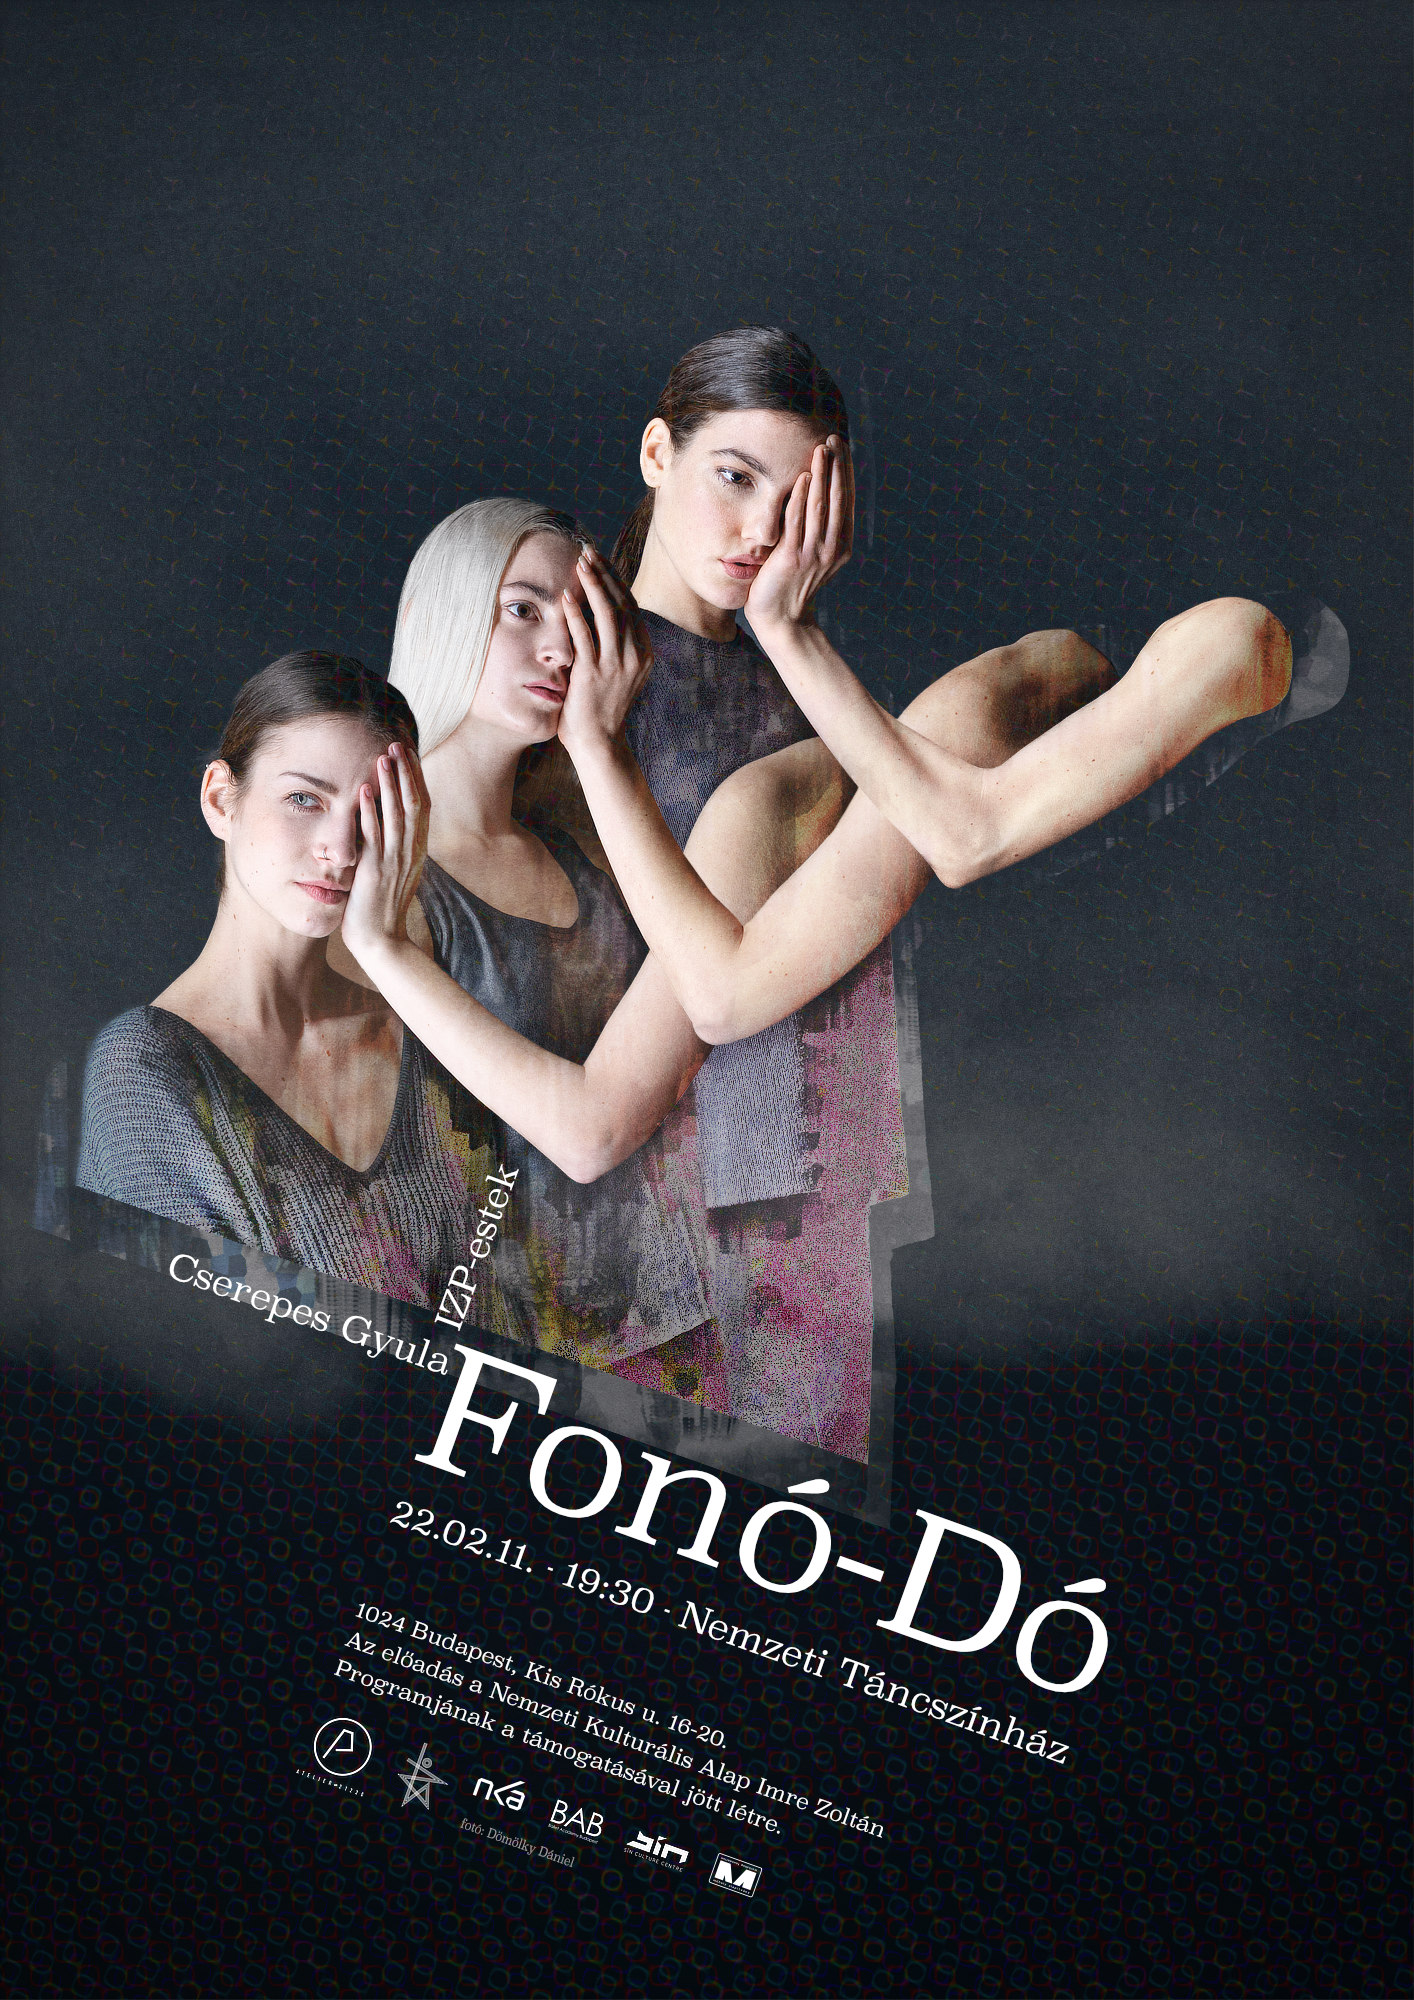 fonó-dó-contemporary-dance-performance-01